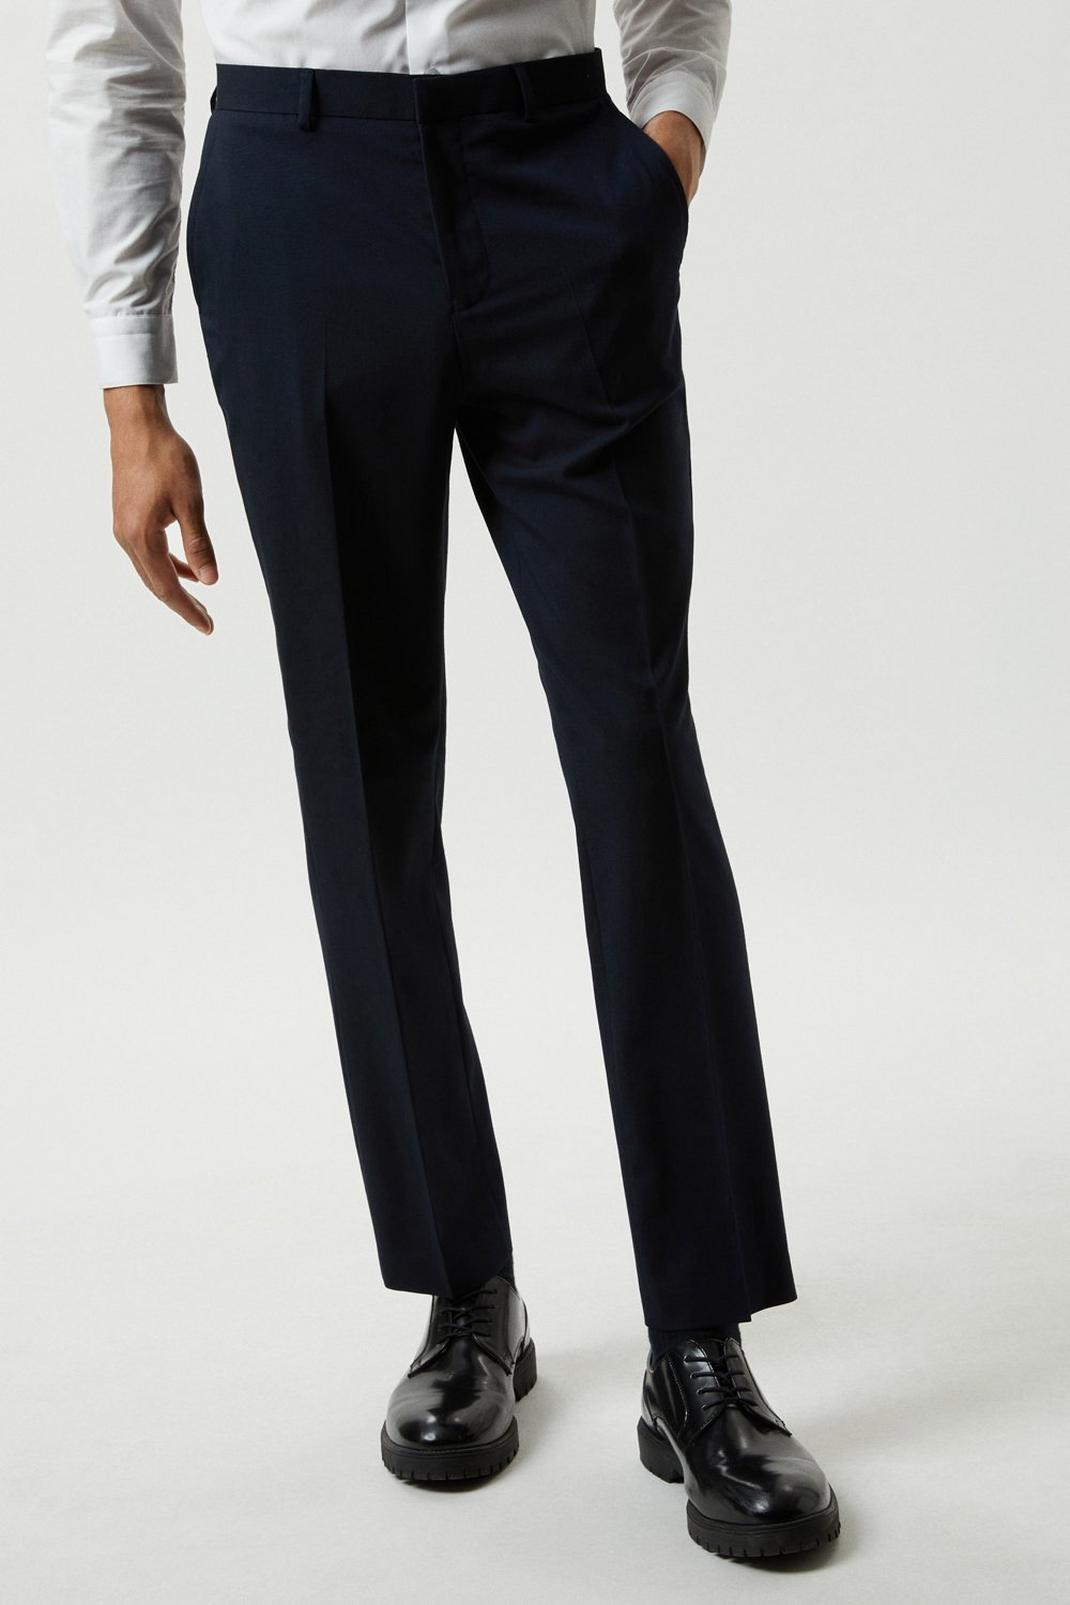 Slim Fit Navy Essential Suit Trousers | Burton UK